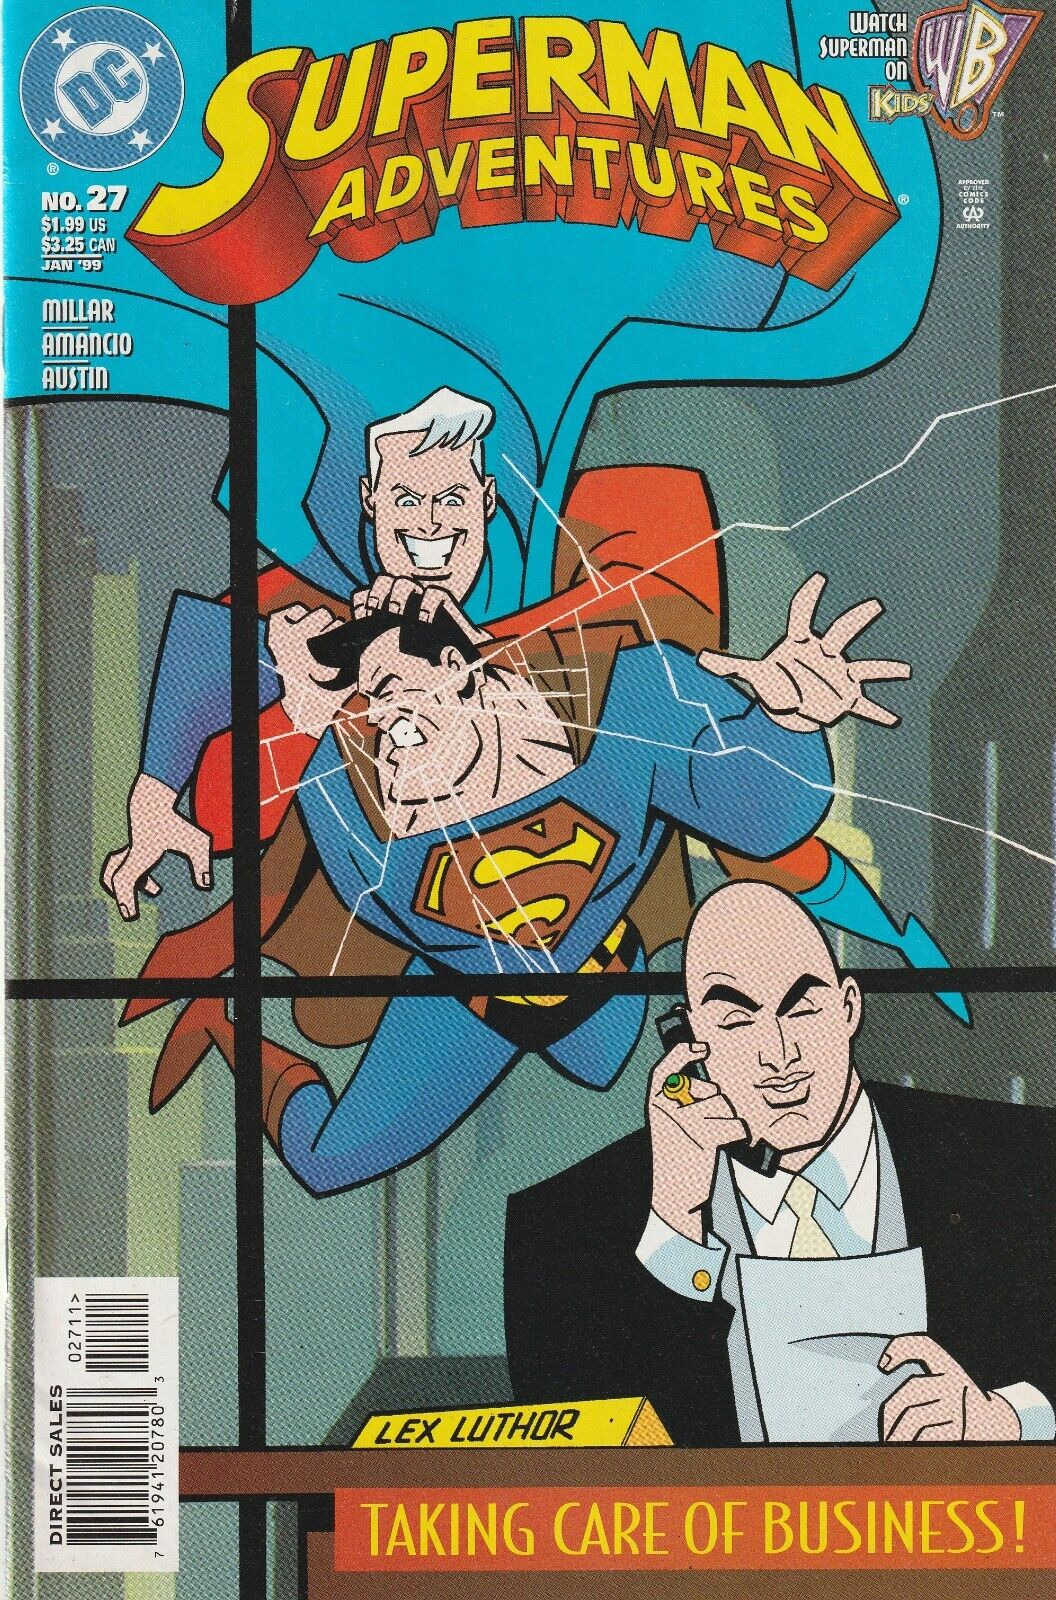 SUPERMAN ADVENTURES #27   LEX LUTHOR * PARASITE   KIDS WB * DC  1999  NICE